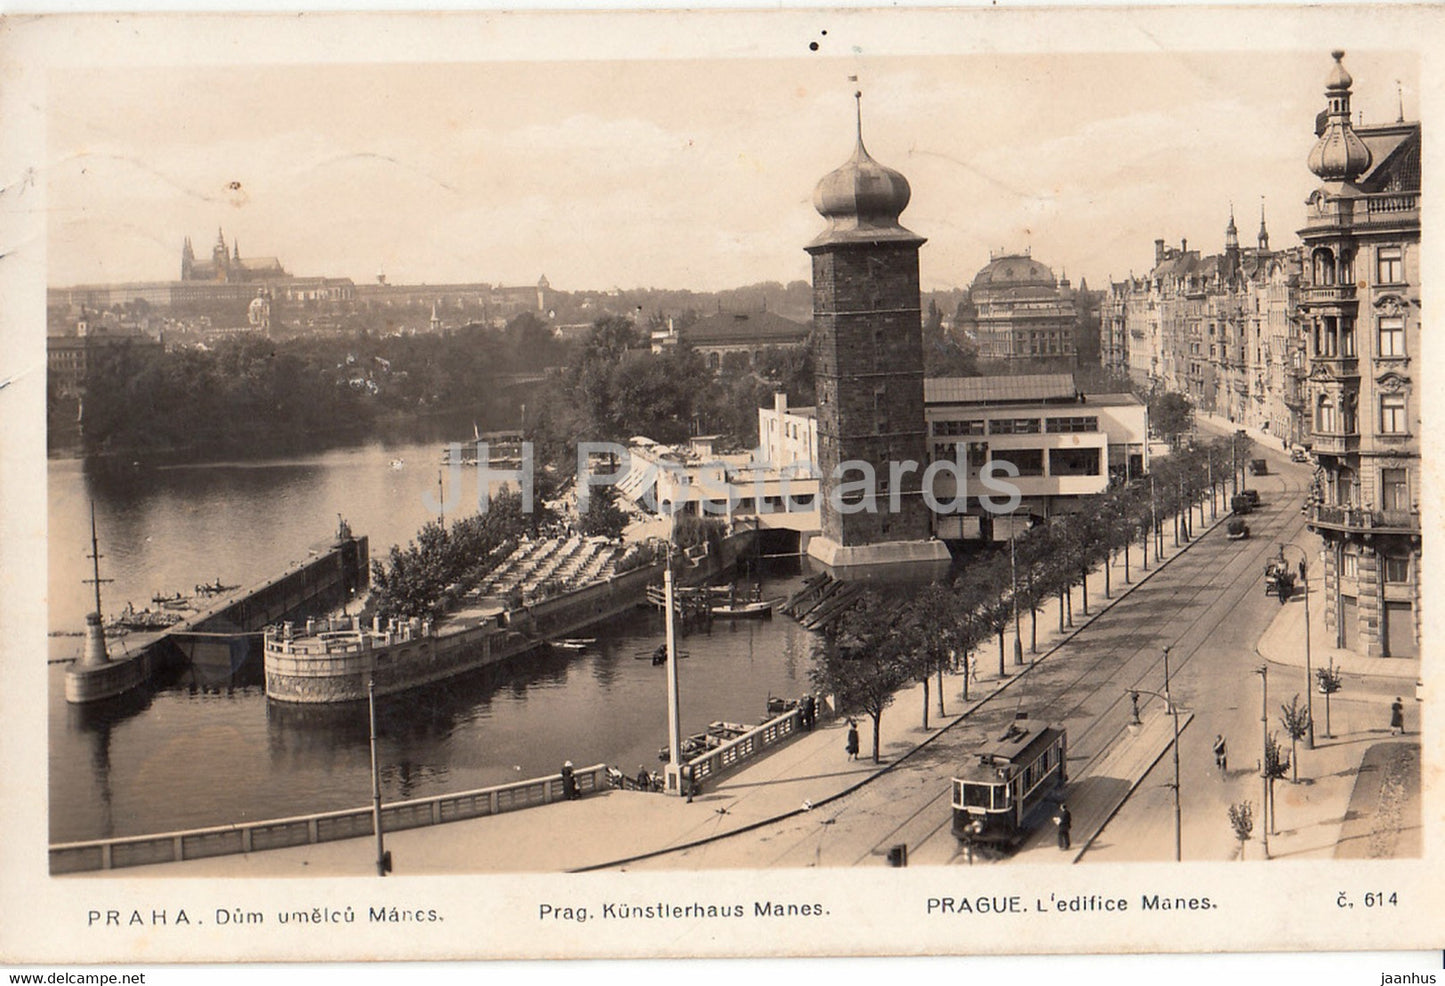 Praha - Prague - Dum umelcu Manes - Kunstlerhaus - tram - 614 - old postcard - 1935 - Czech Republic - used - JH Postcards